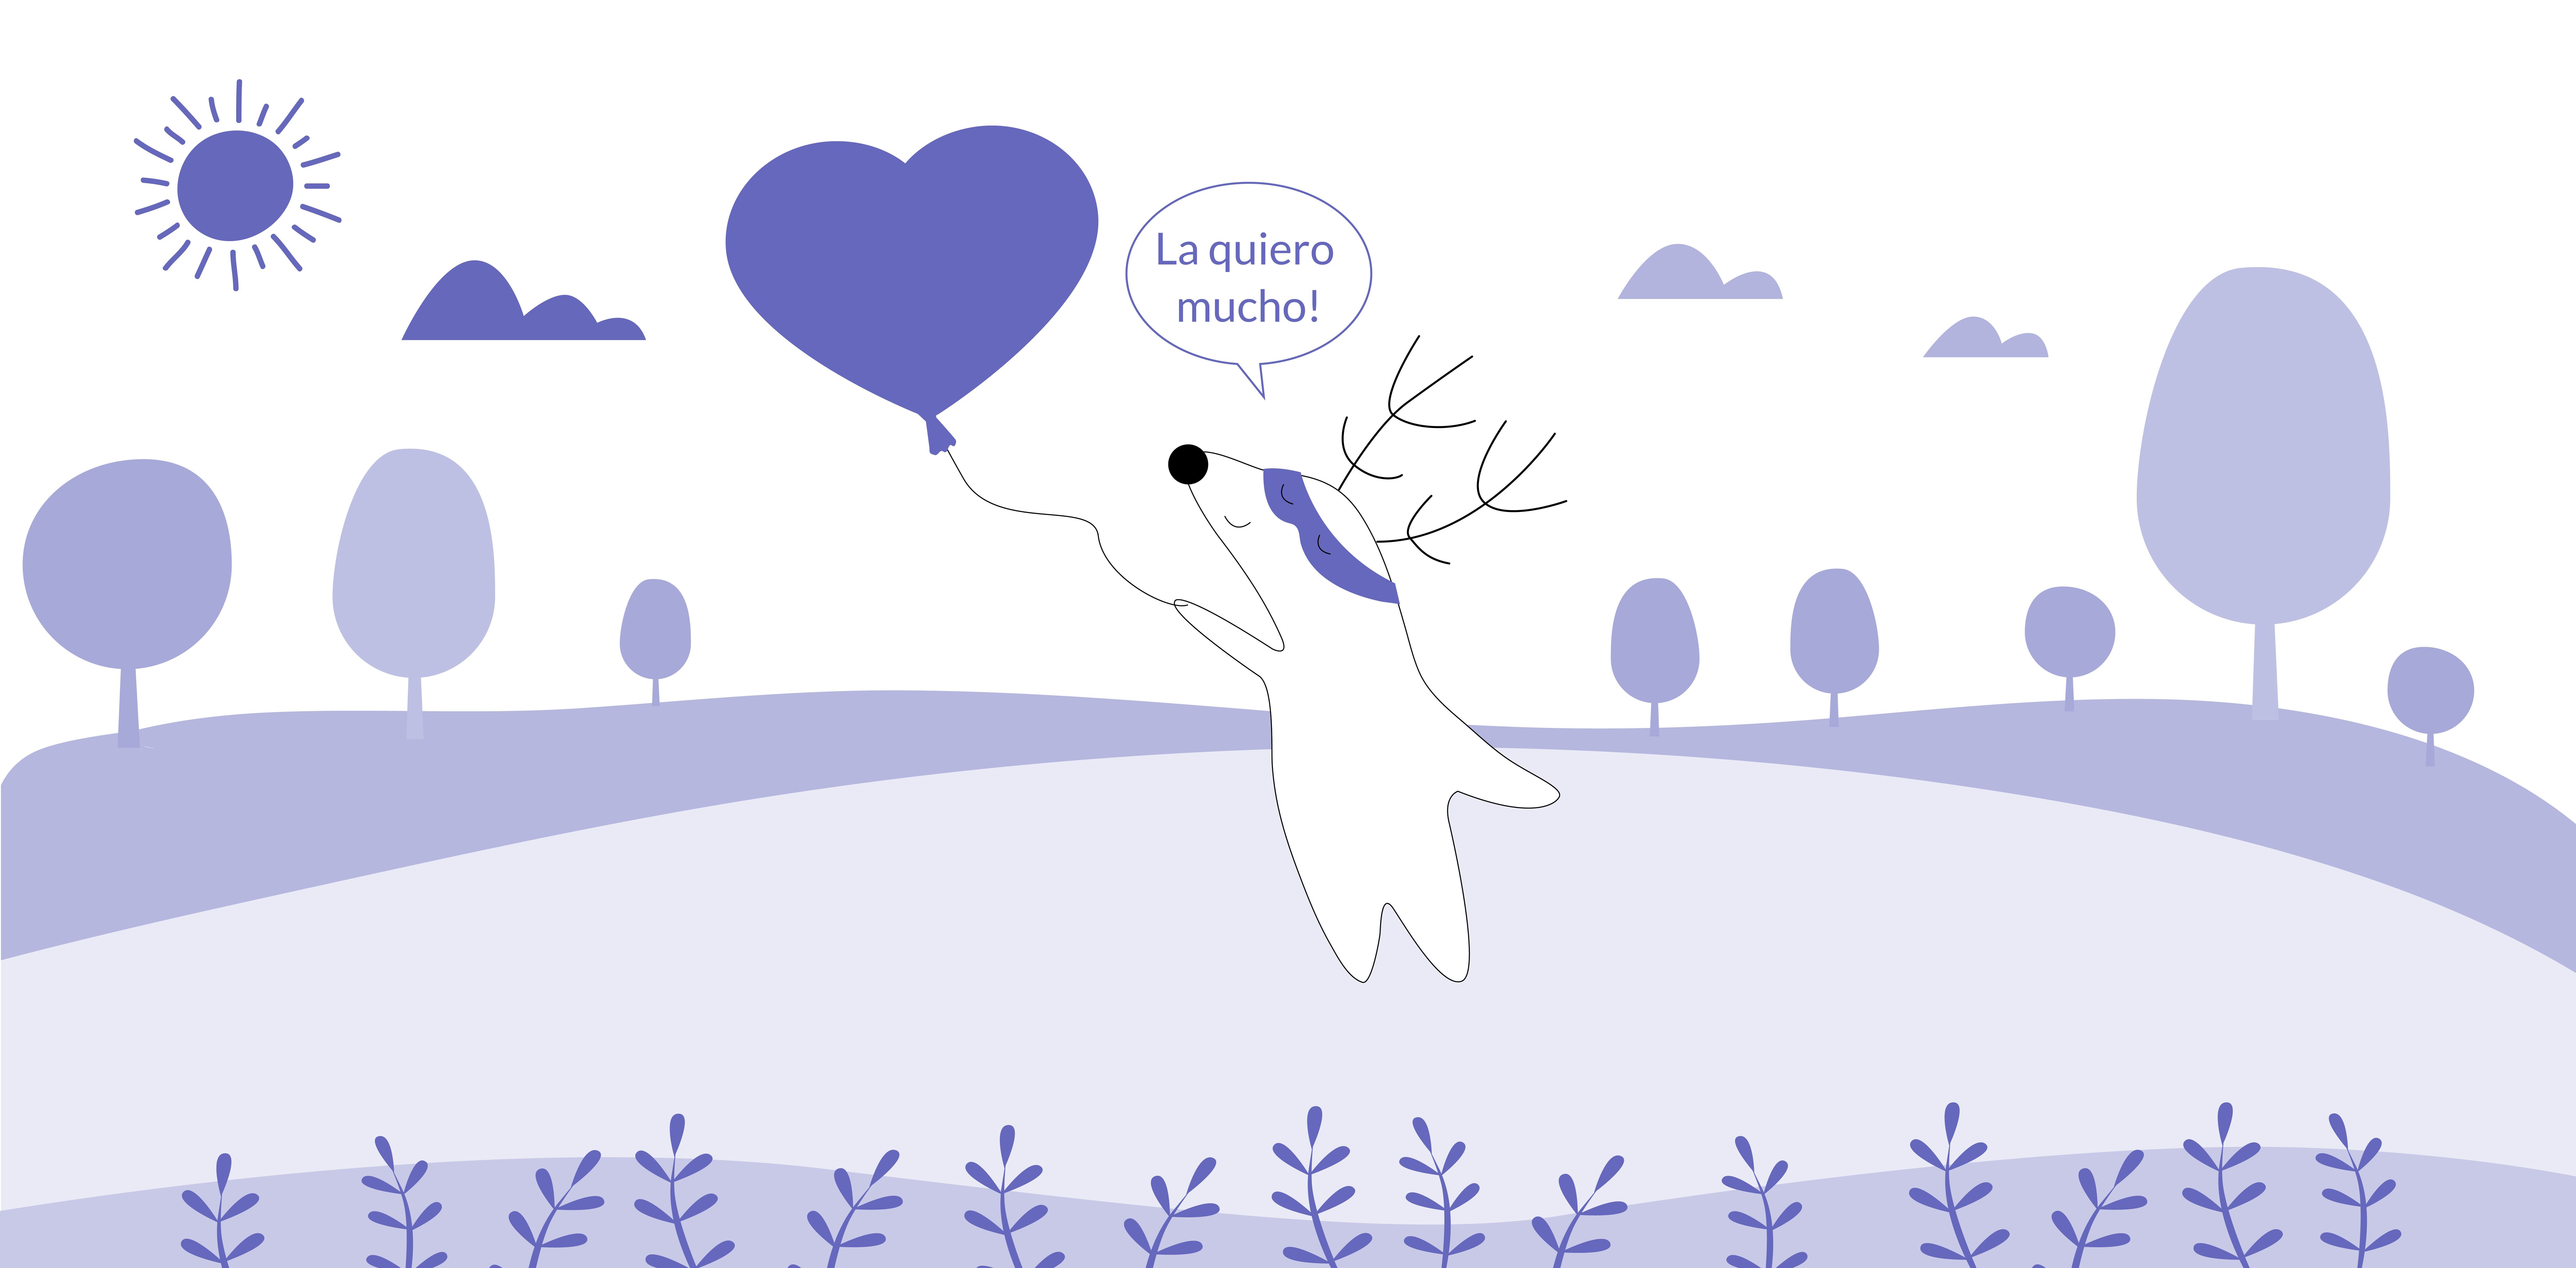 Soren holds a heart-shaped ballon, thinking “La quiero mucho.”